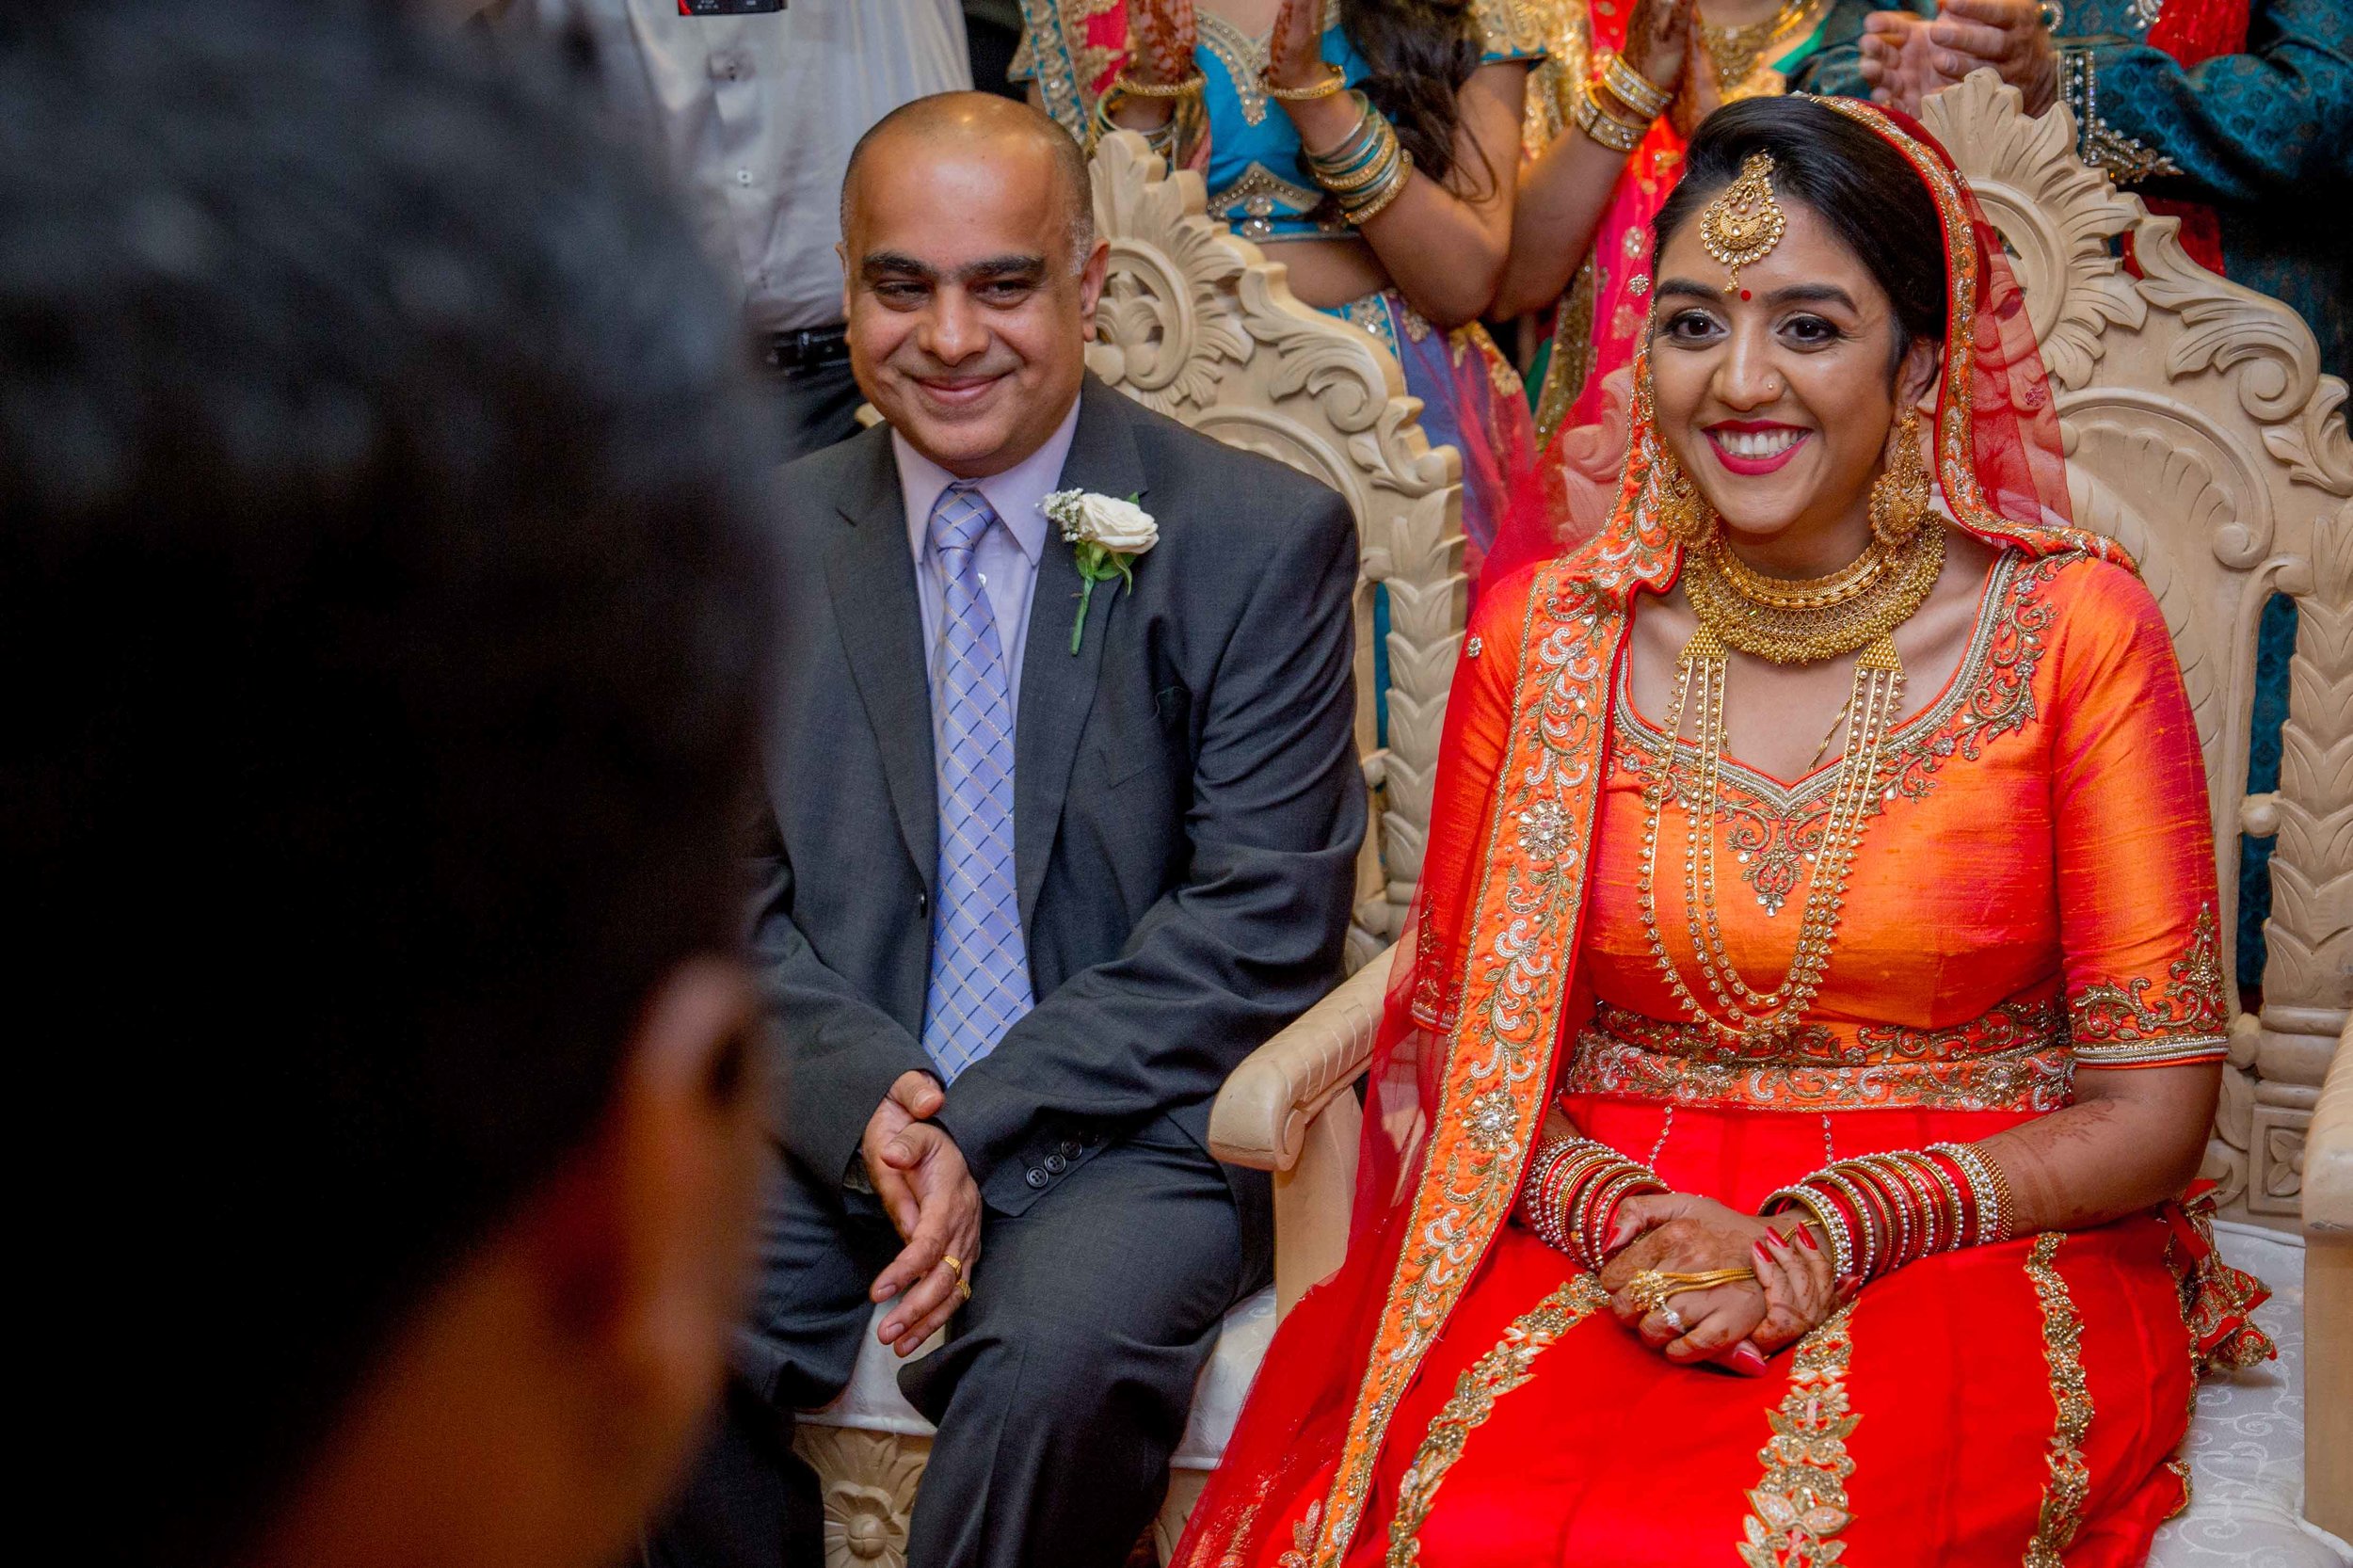 premier-banquetting-london-Hindu-asian-wedding-photographer-natalia-smith-photography-18.jpg